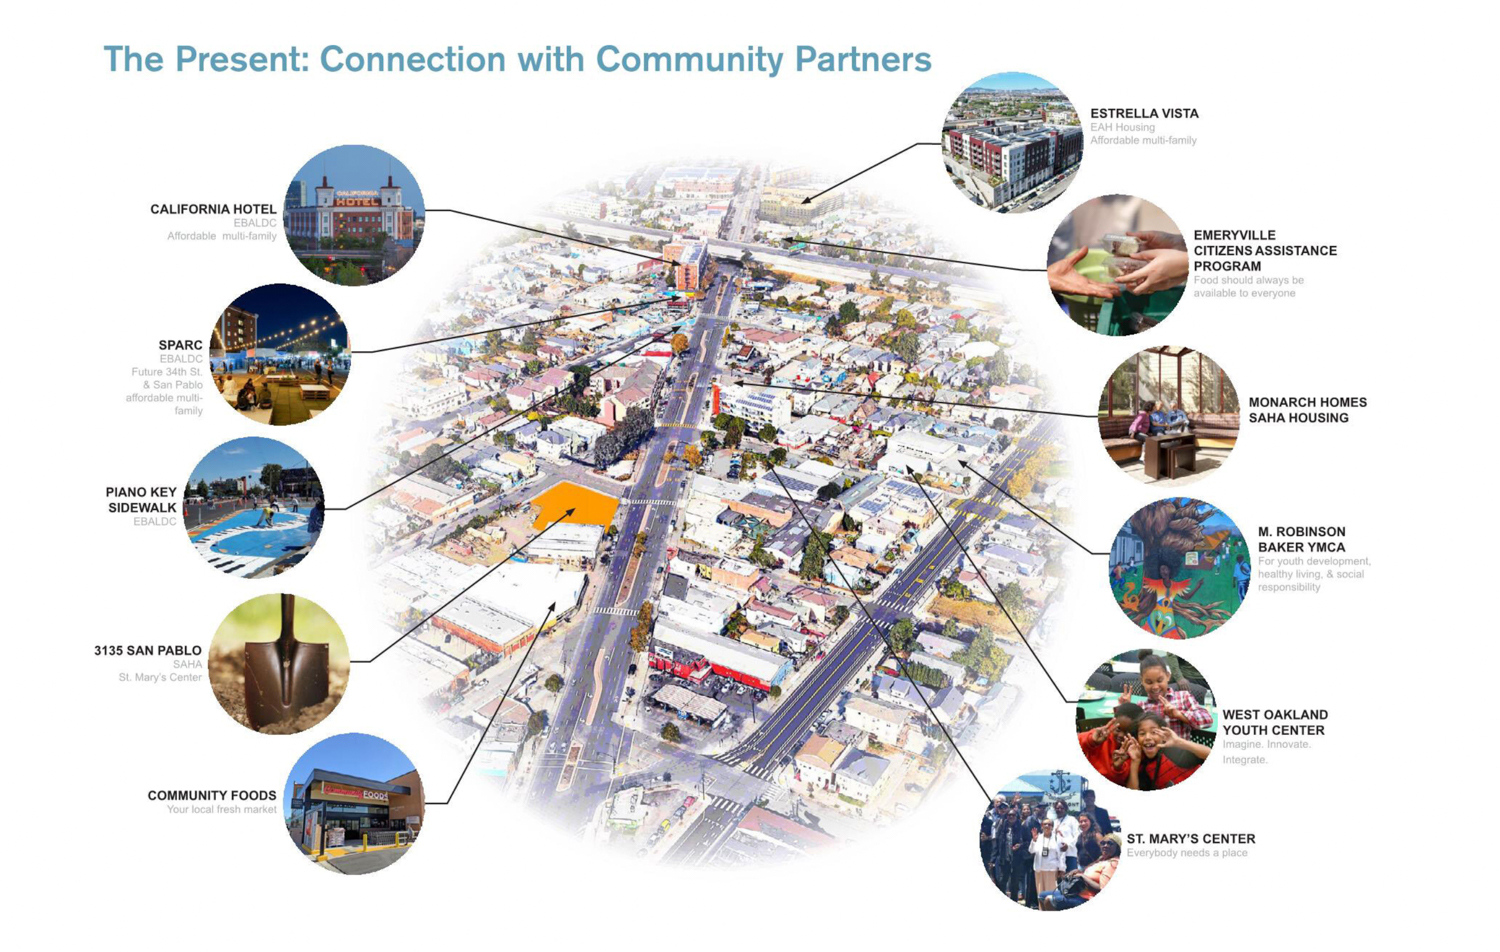 3135 San Pablo Avenue site context and community, illustration courtesy Saint Mary's Center